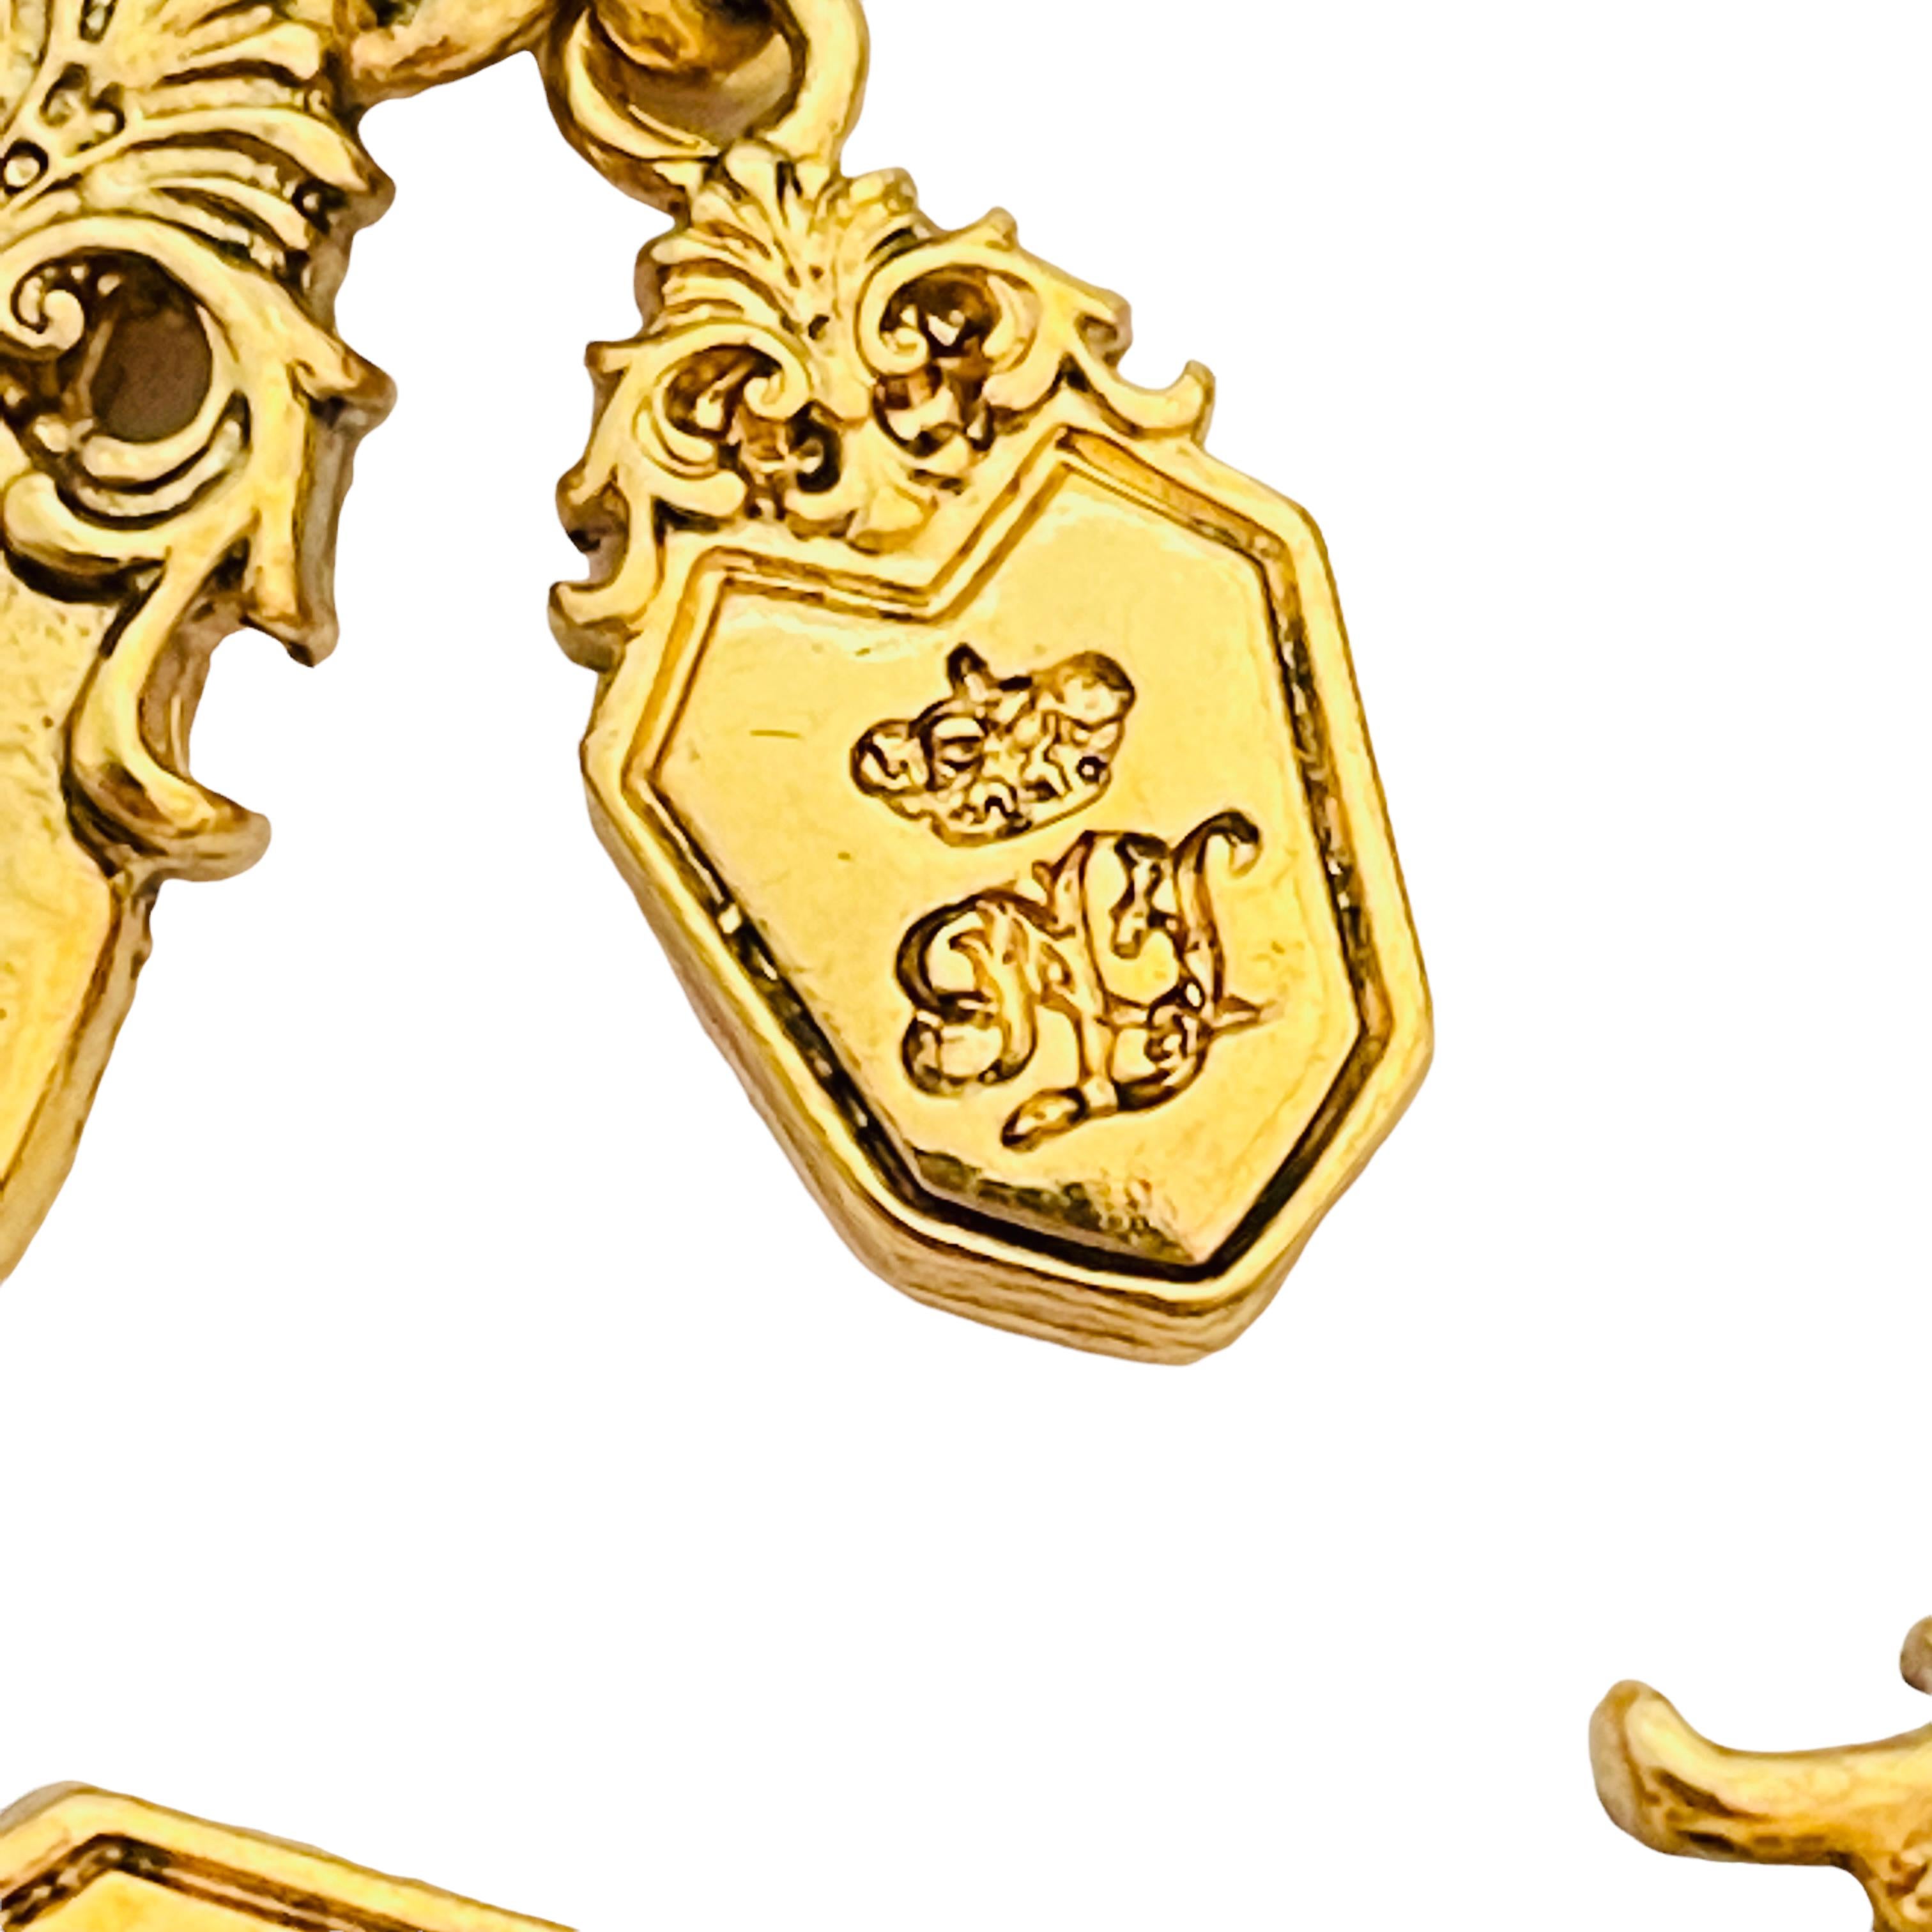 Vtg gold black glass necklace earrings bracelet set designer runway In Excellent Condition For Sale In Palos Hills, IL